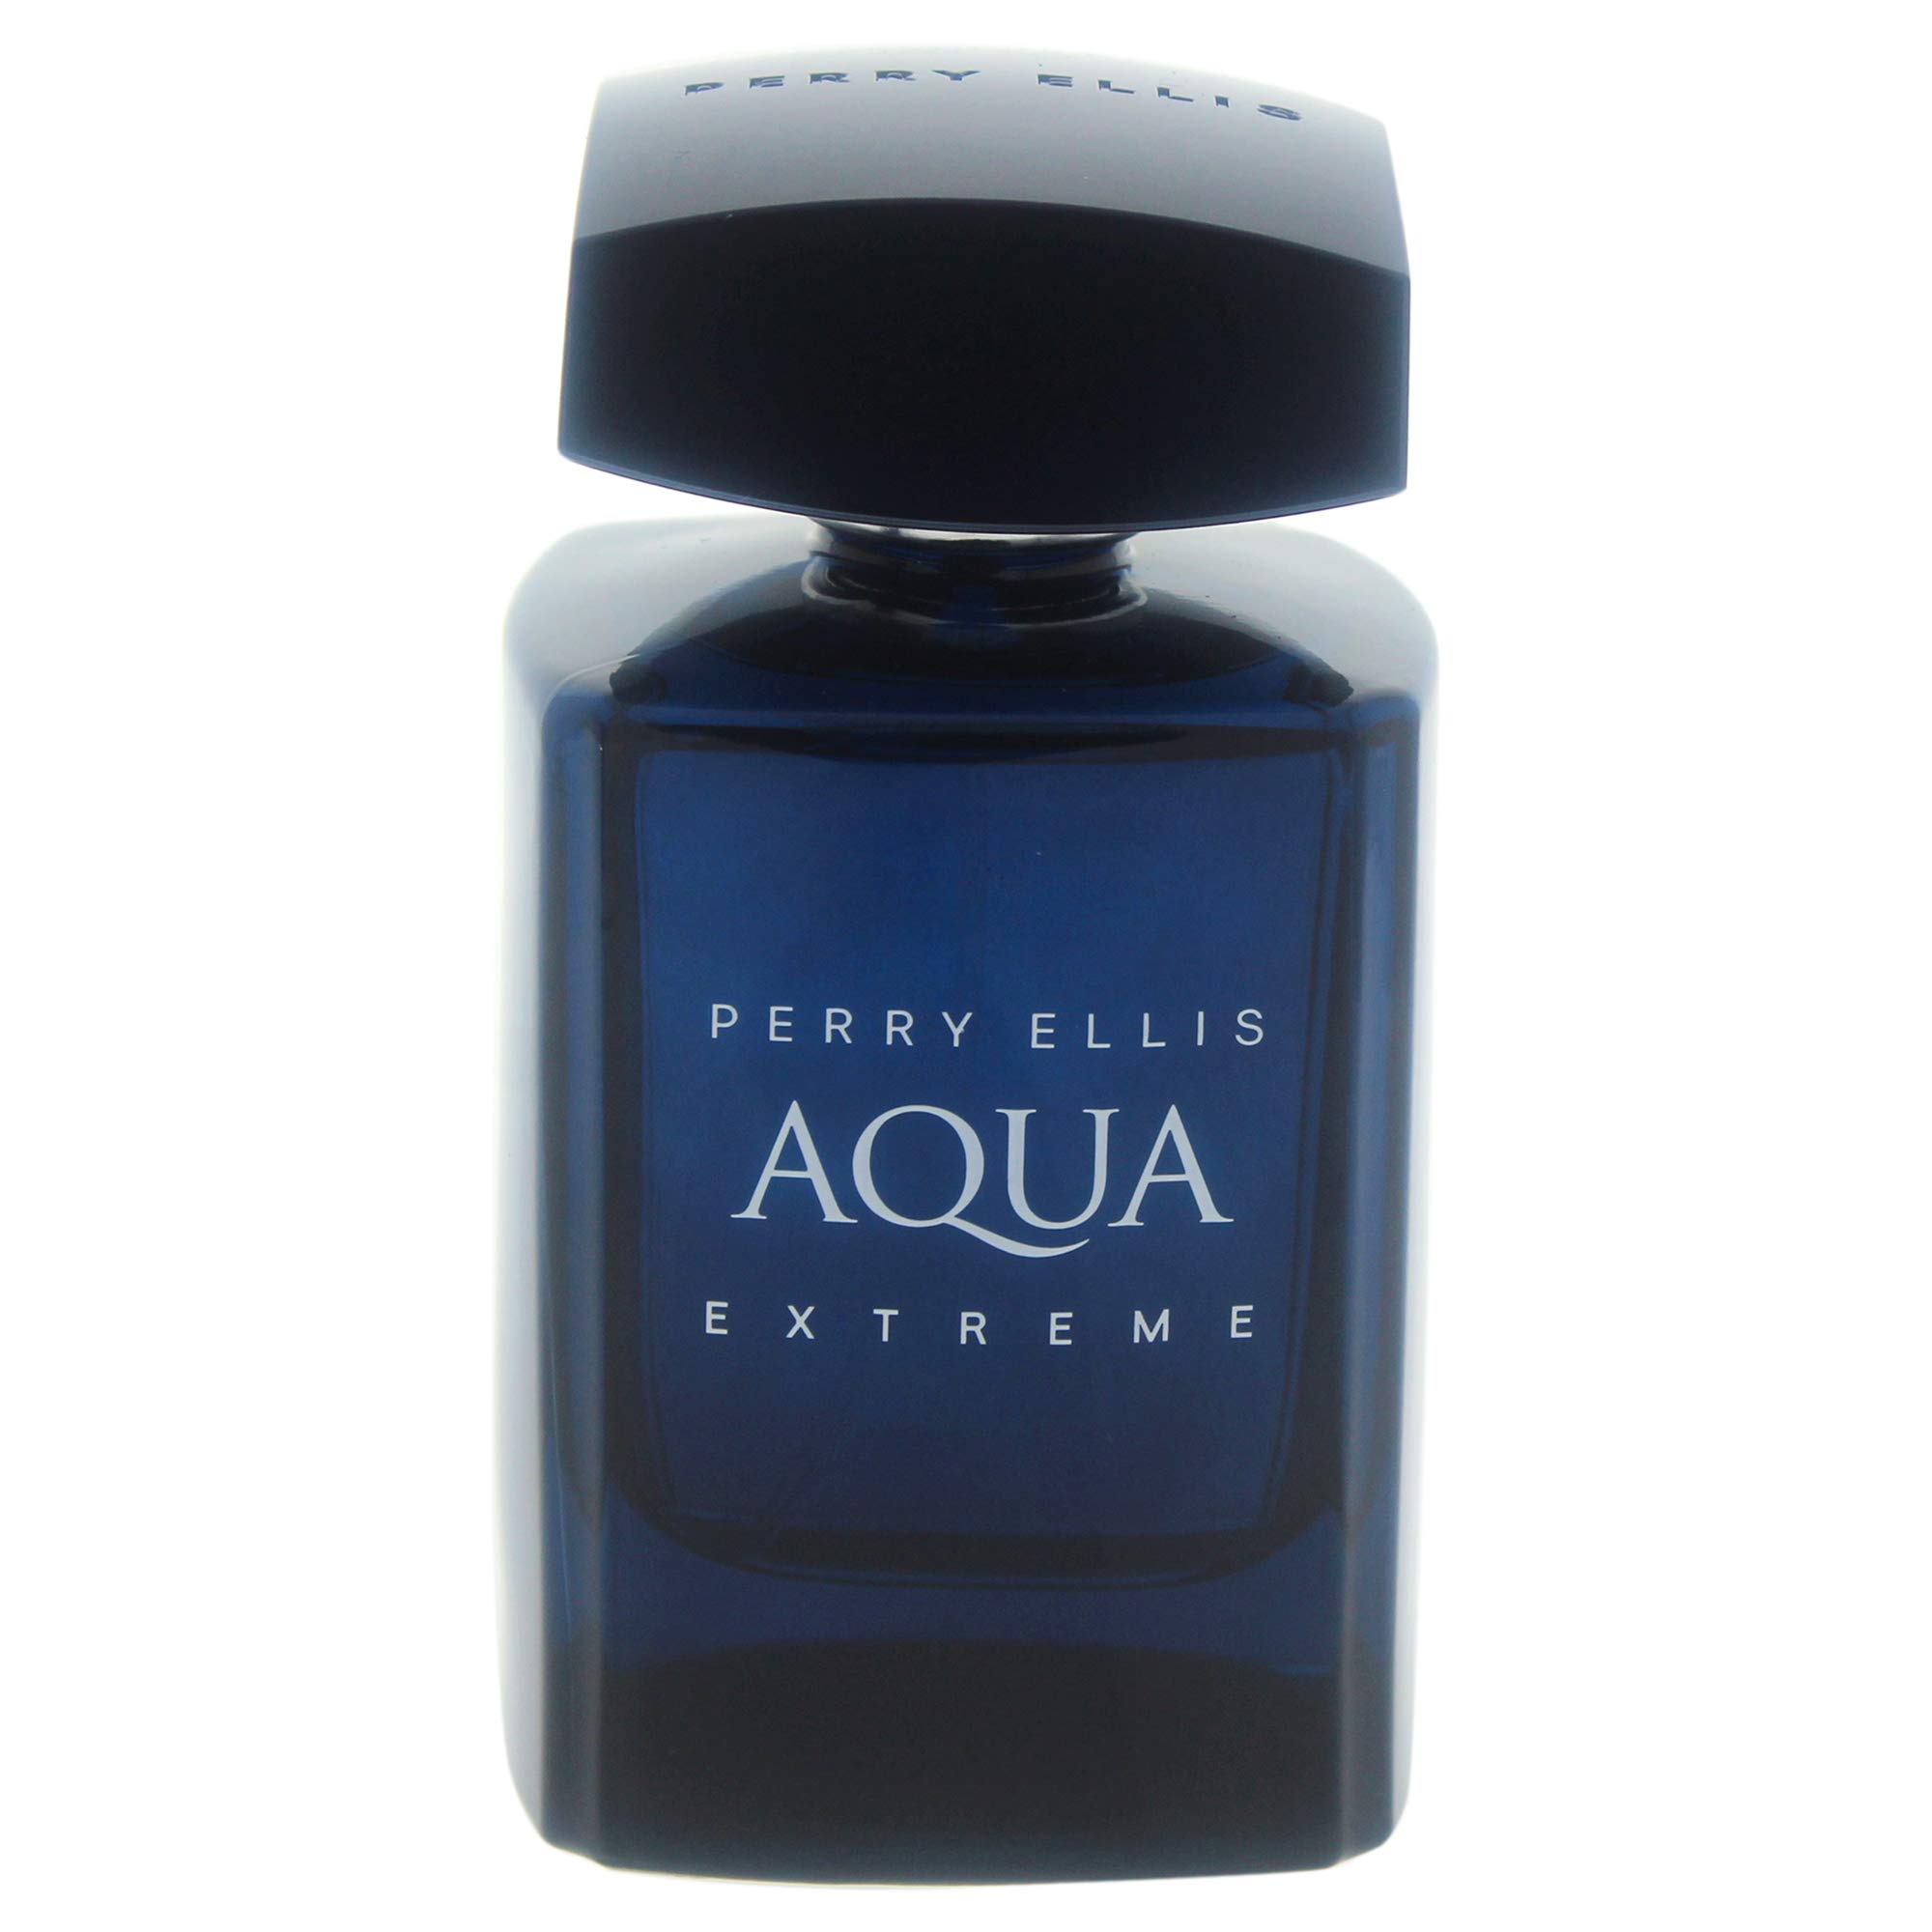 Perry Ellis Aqua Extreme Eau De Toilette Spray, 3.4 Ounce